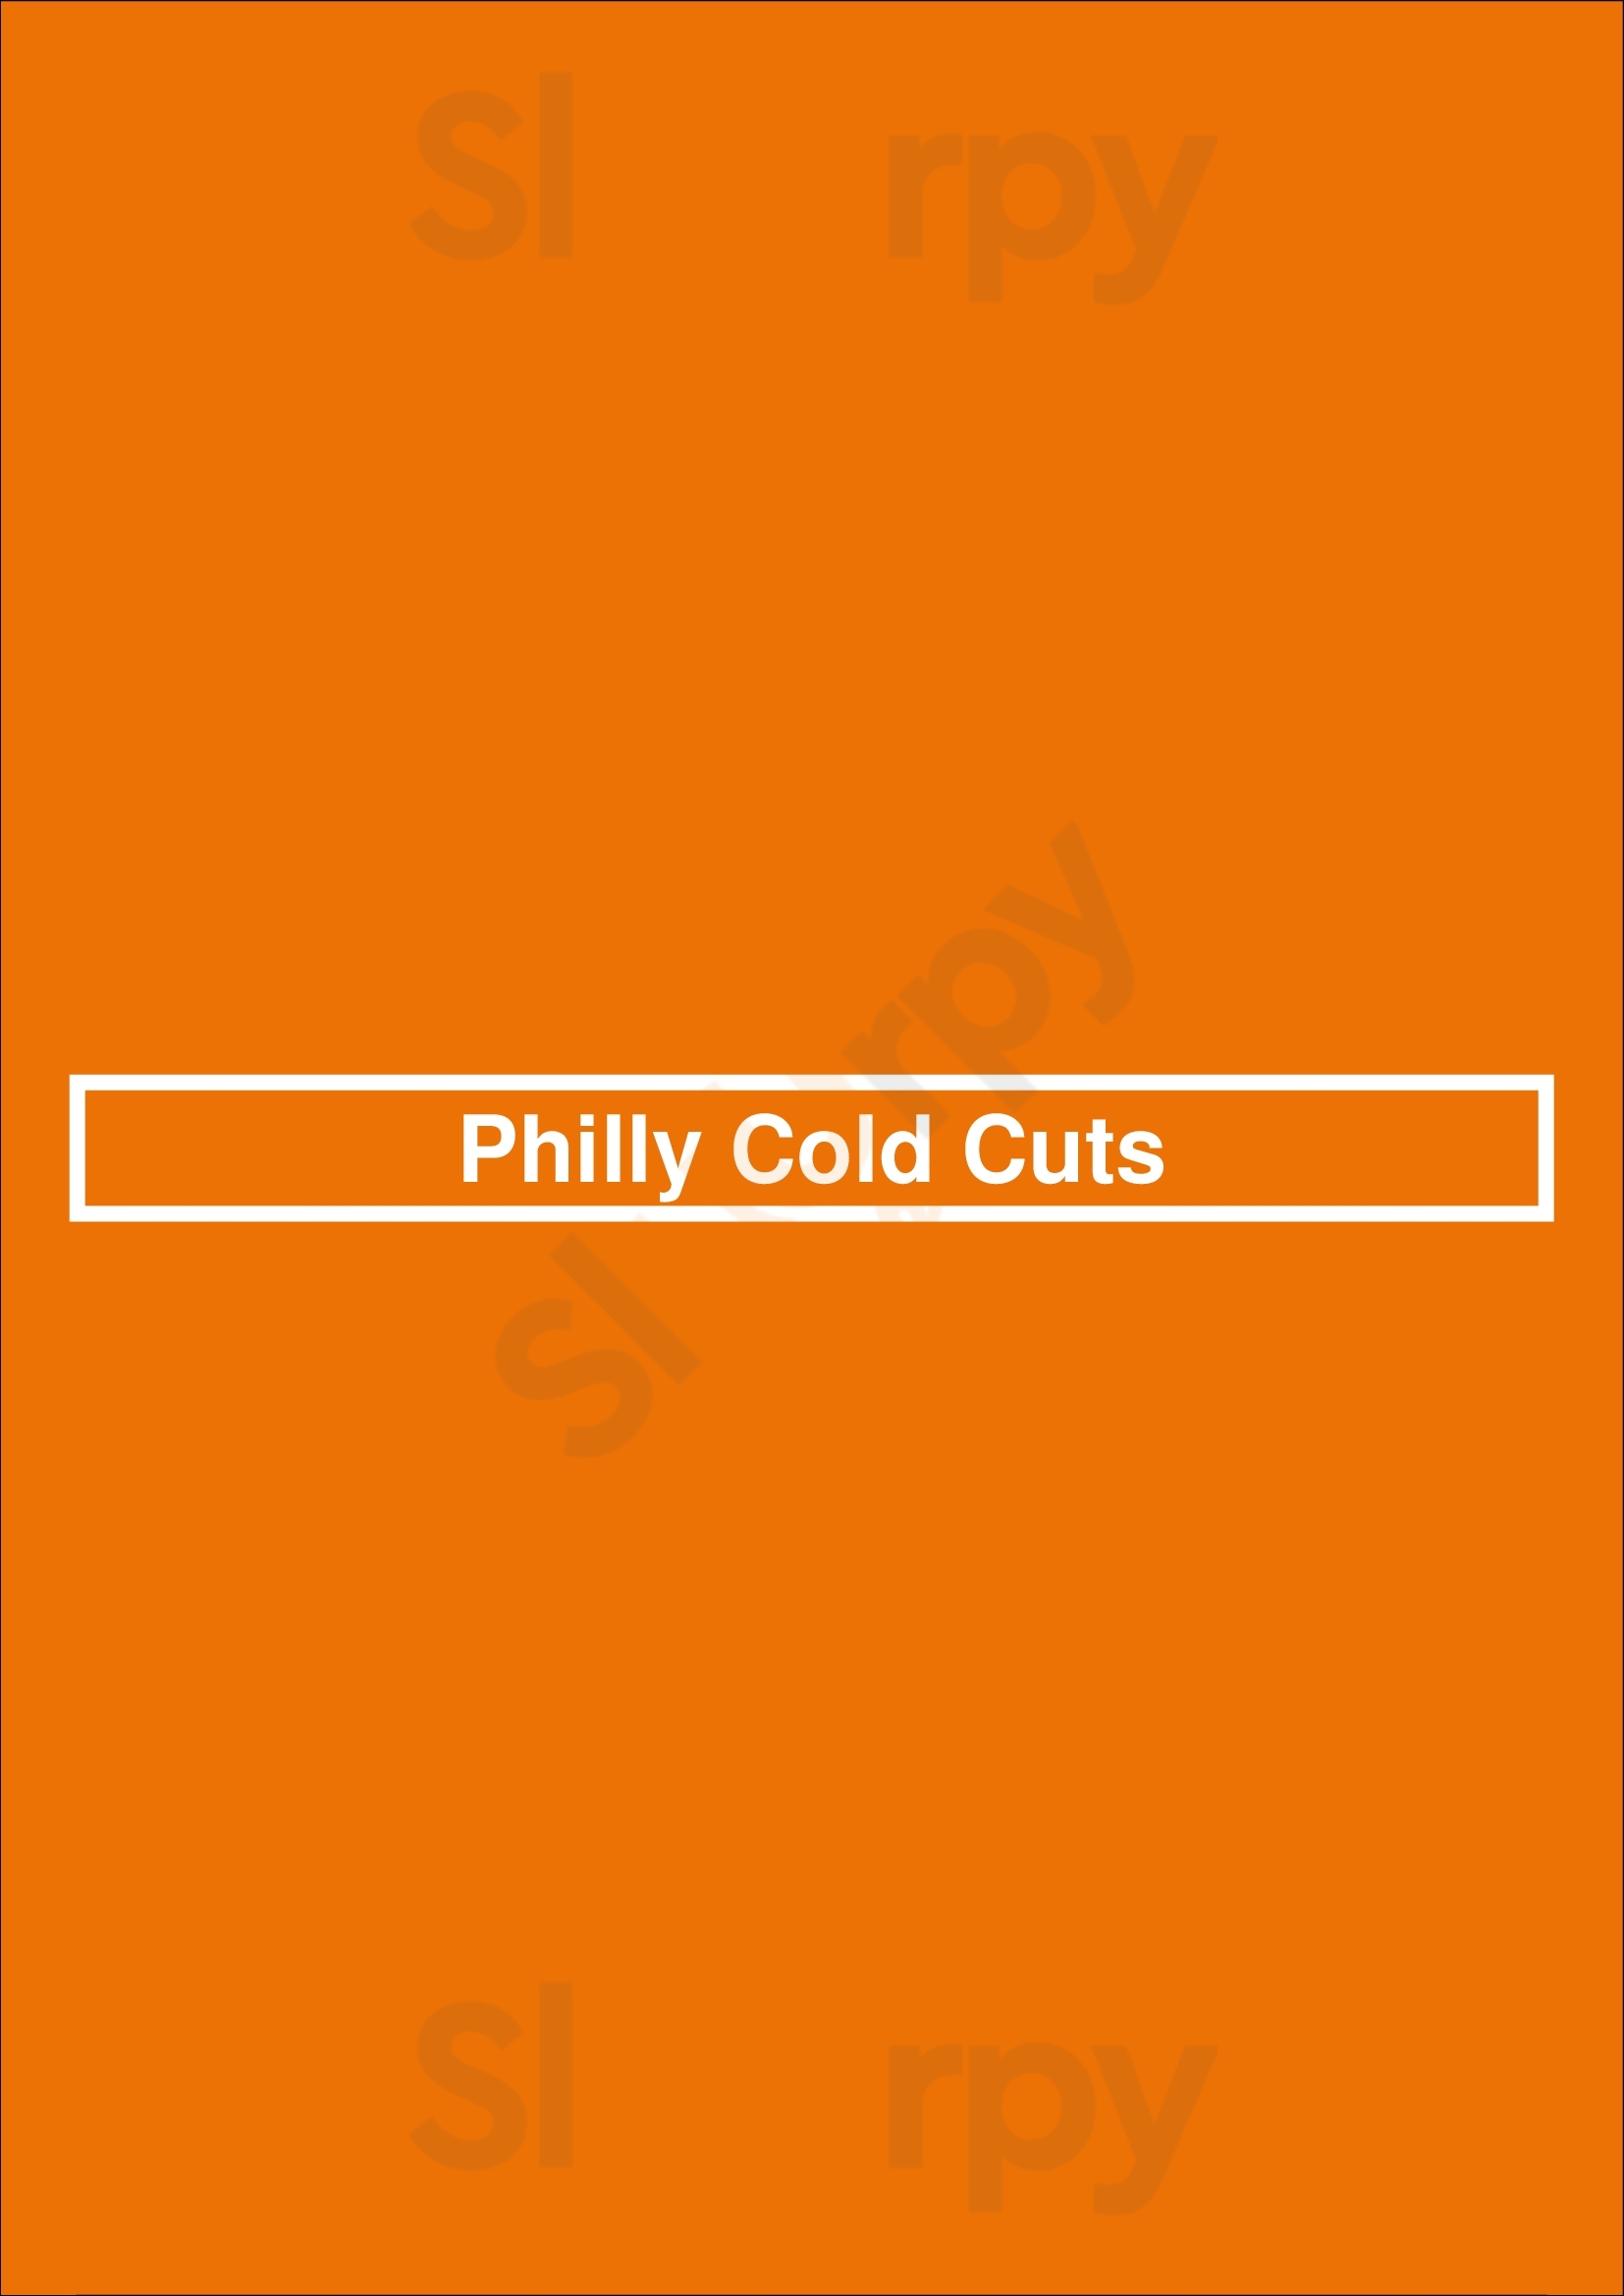 Philly Cold Cuts - Great Neck Virginia Beach Menu - 1